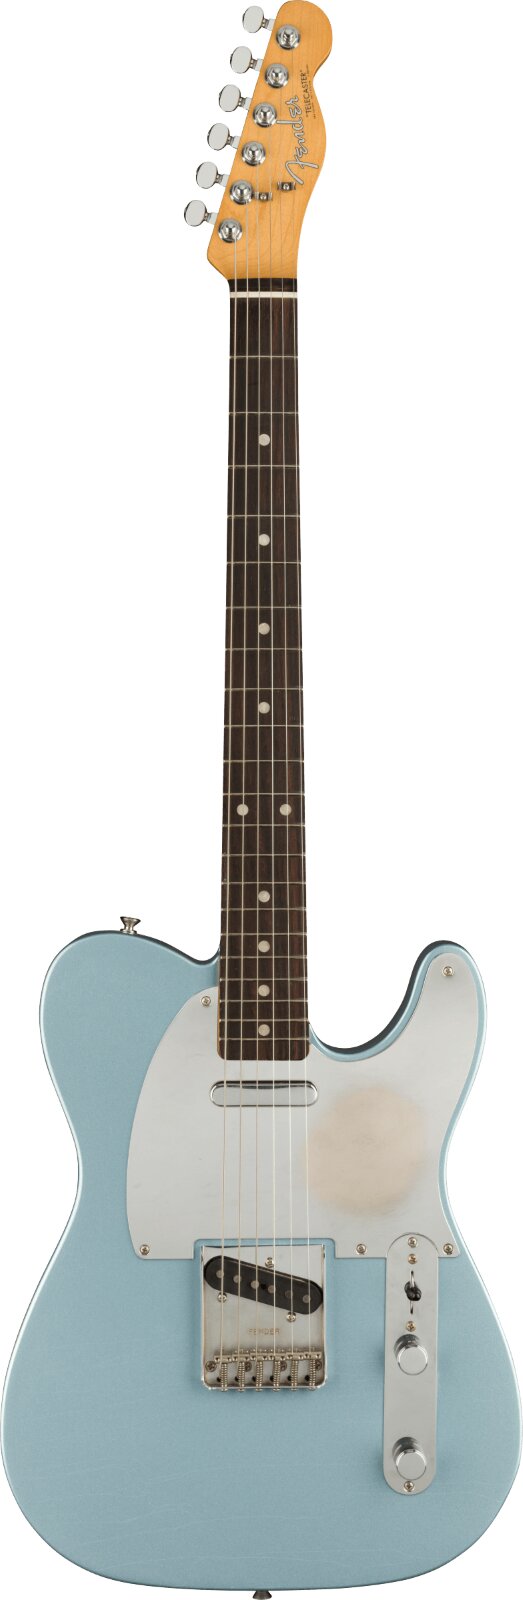 Fender Chrissie Hynde Telecaster Rosewood Griffbrett Ice Blue Metallic : photo 1